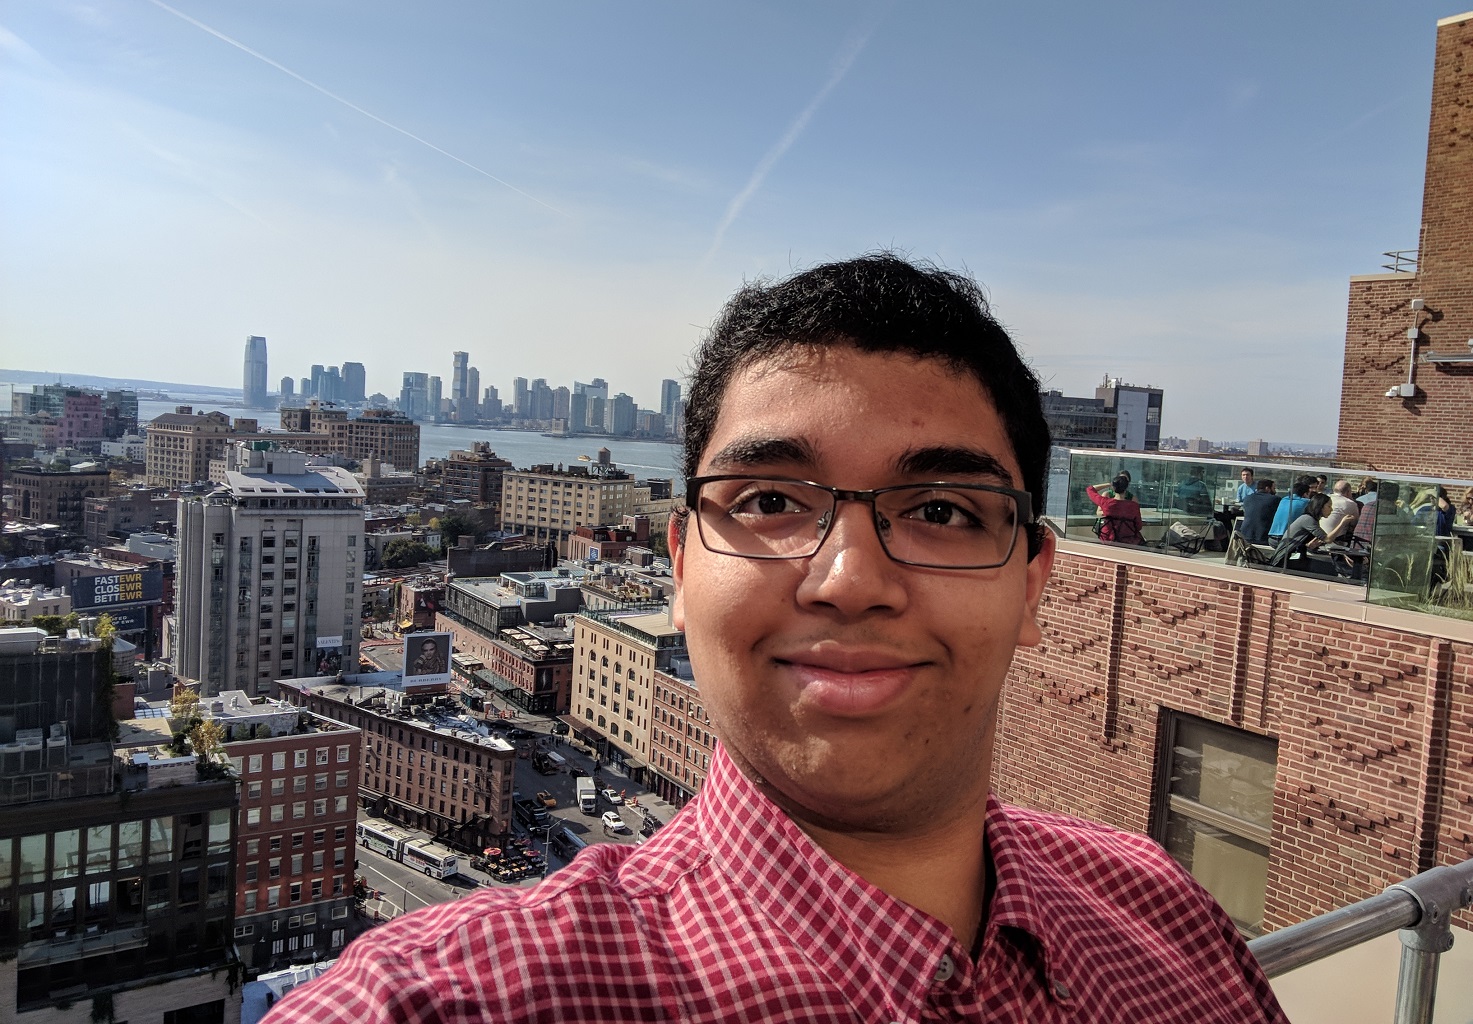 Profile photo of Sahil at Google's NYC Office